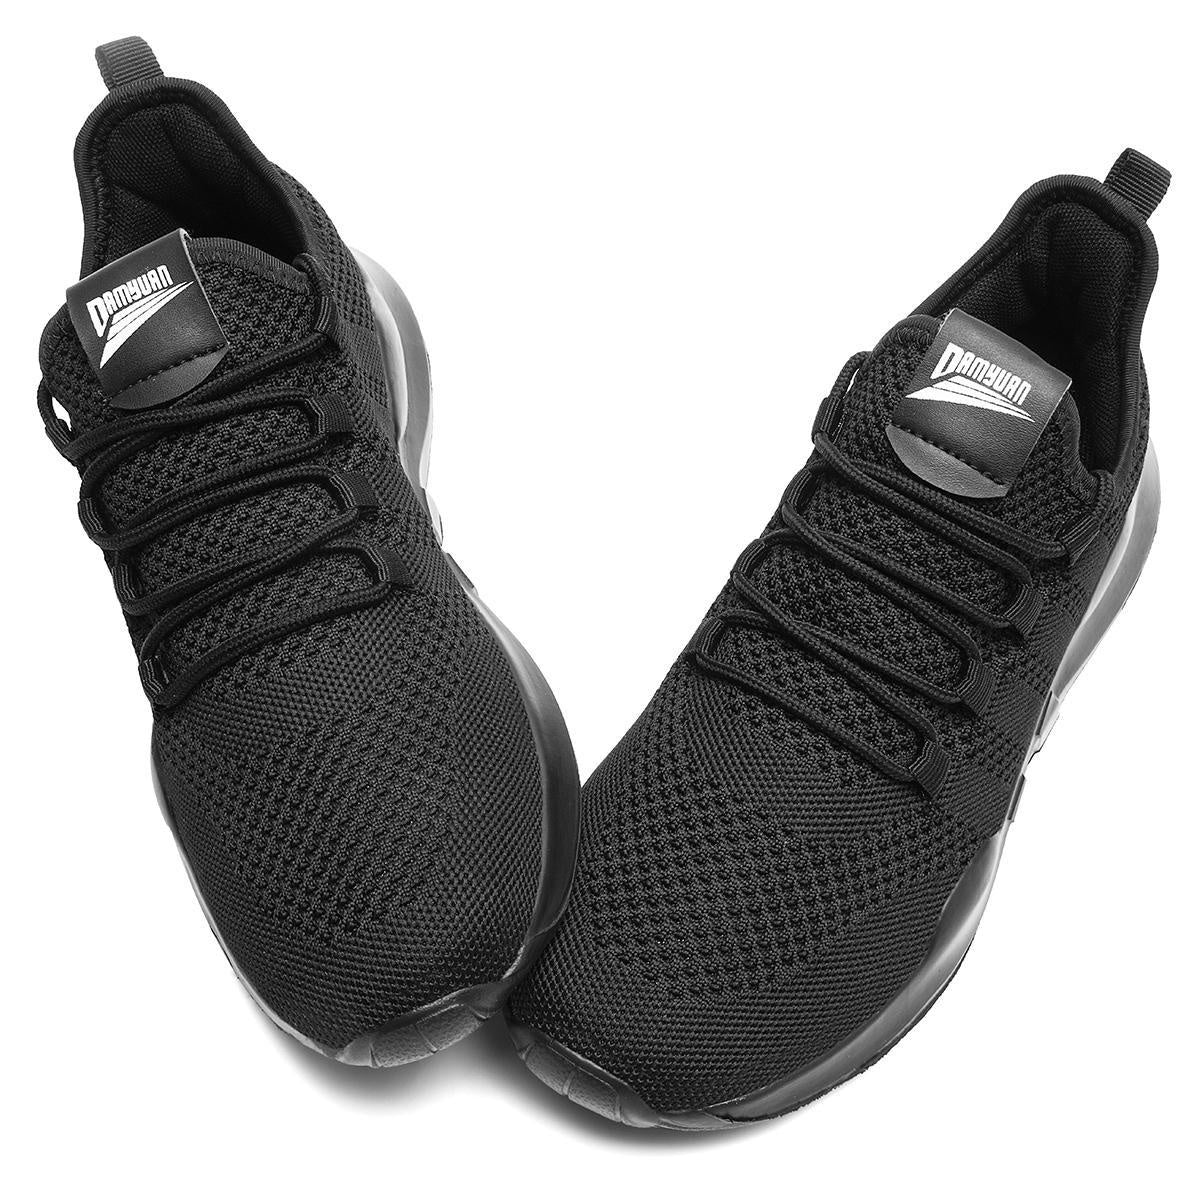 Damyuan Men's Shoes Sneakers Mesh Fitness Shoes Light Running Shoes Outdoor Sports Shoes Walking Casual Shoes